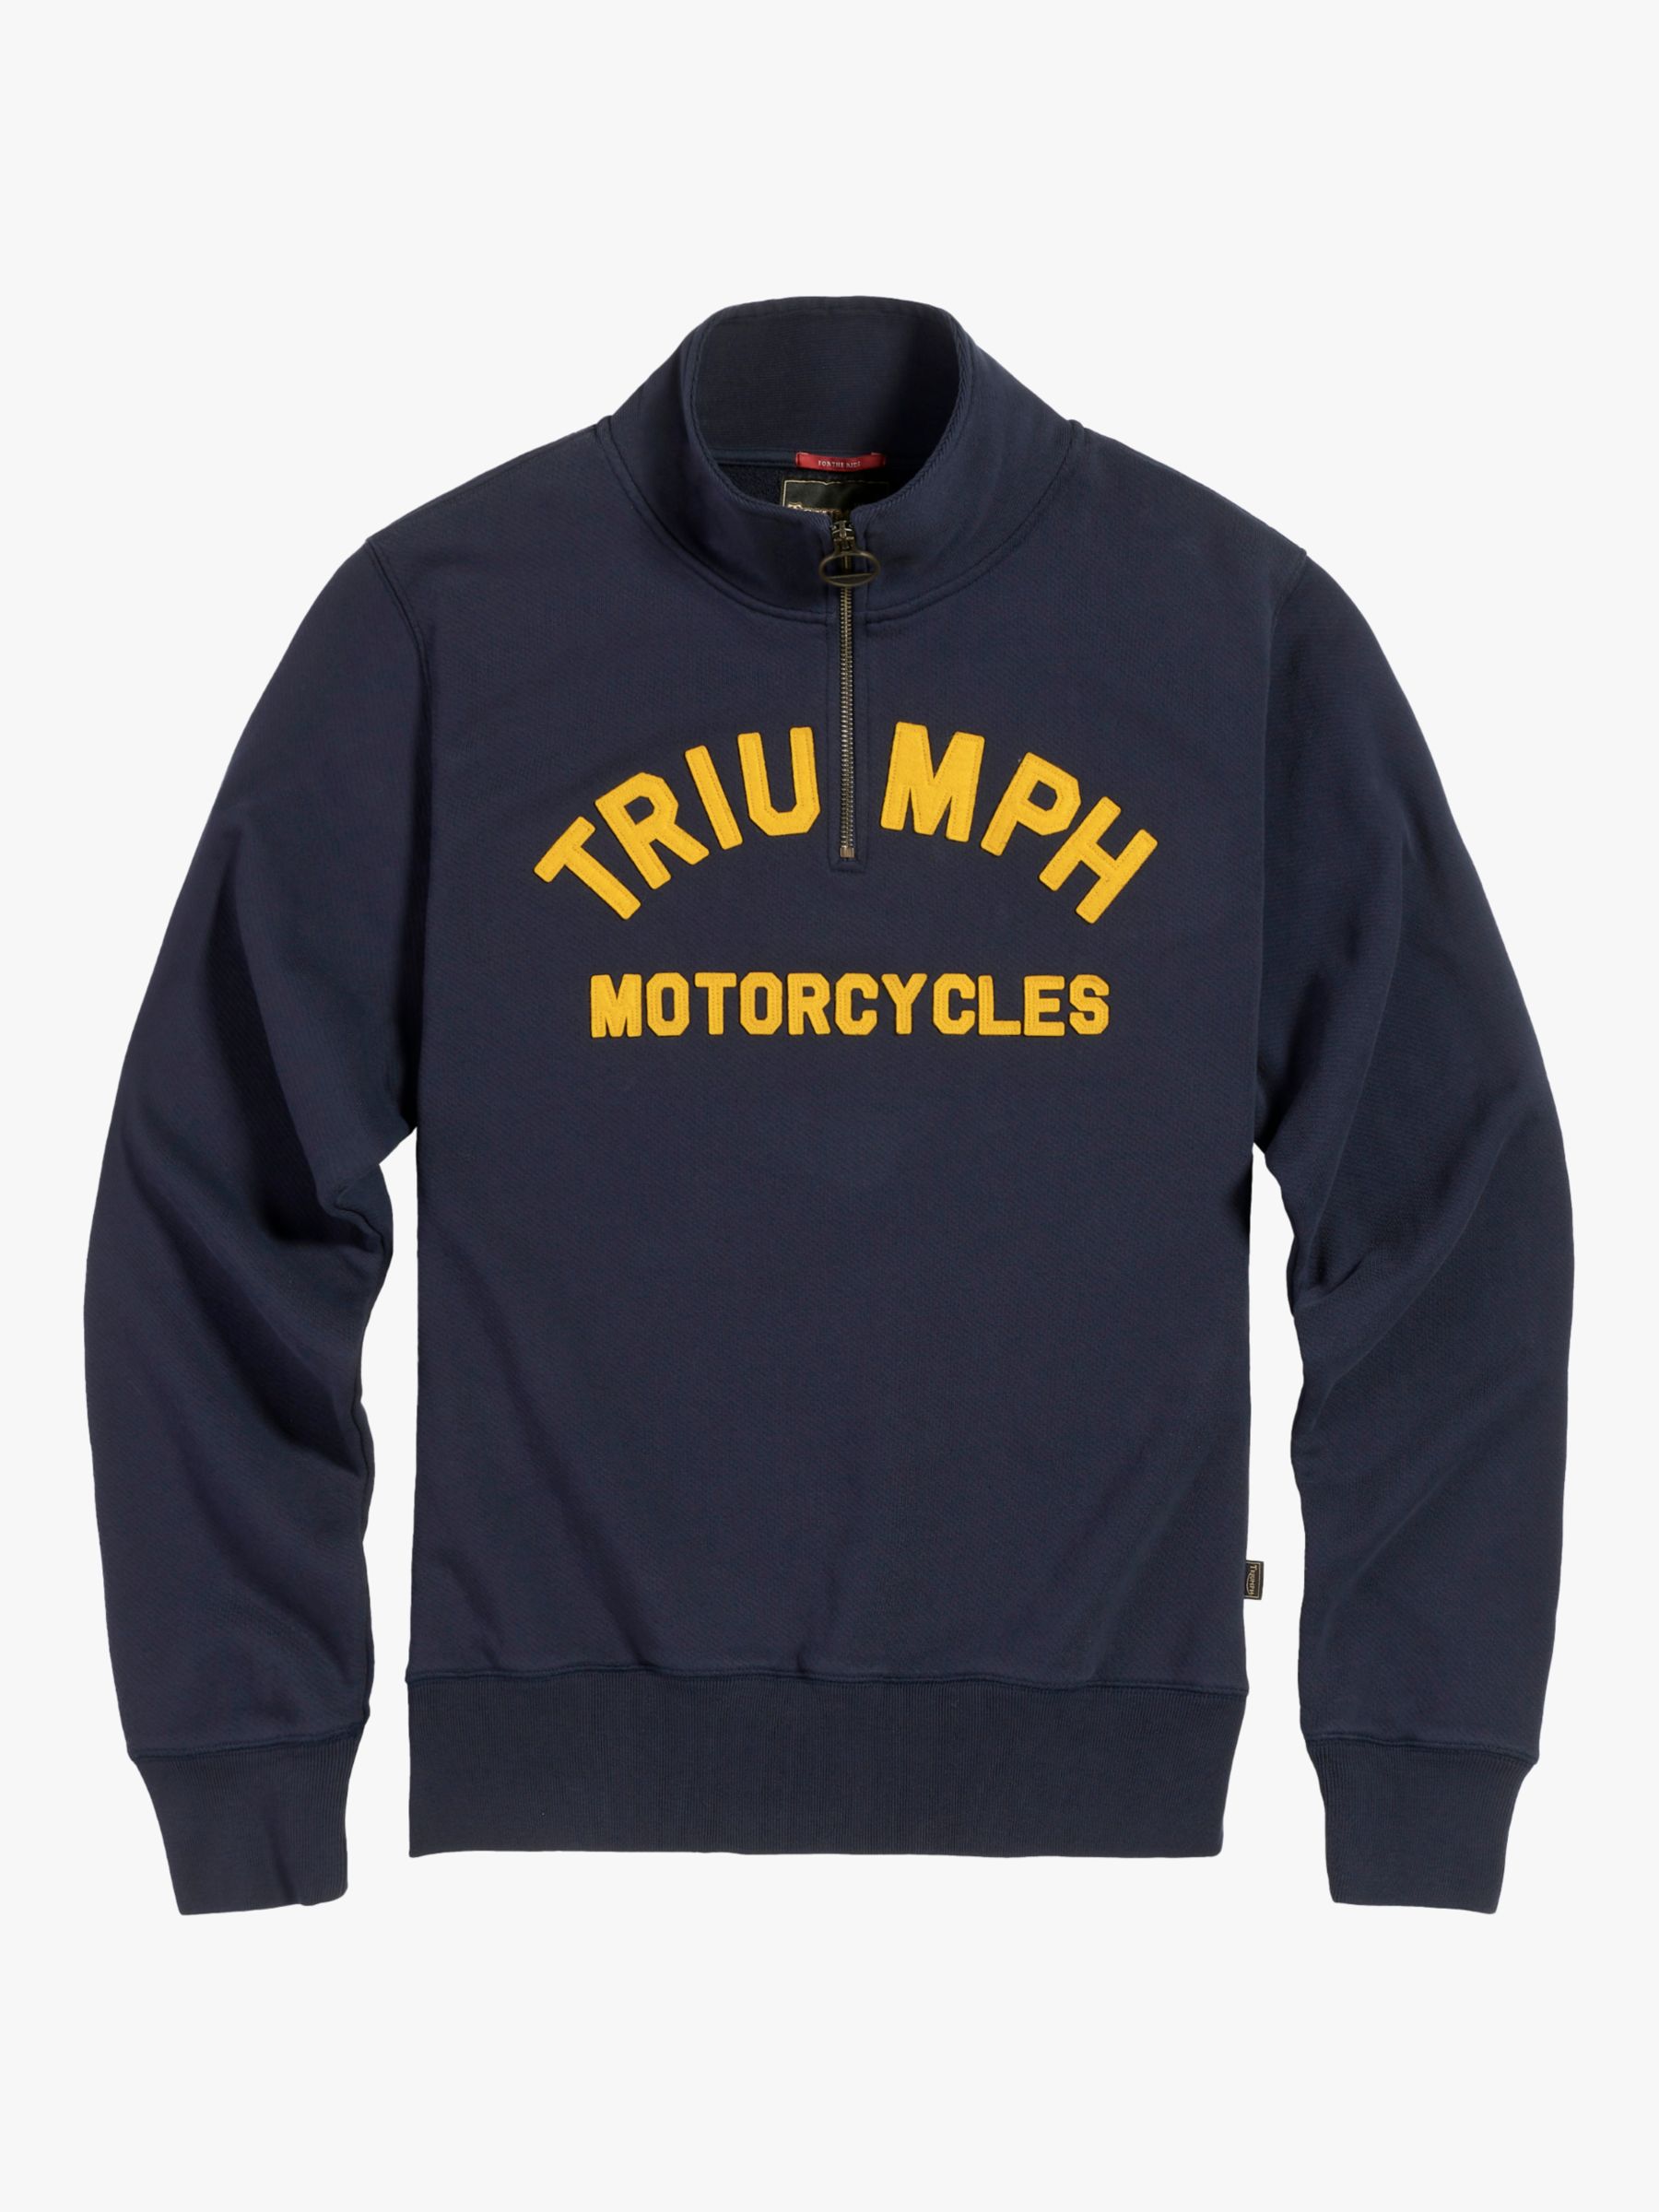 Triumph Motorcycles Ribble Zip Neck Sweatshirt, Indigo, M